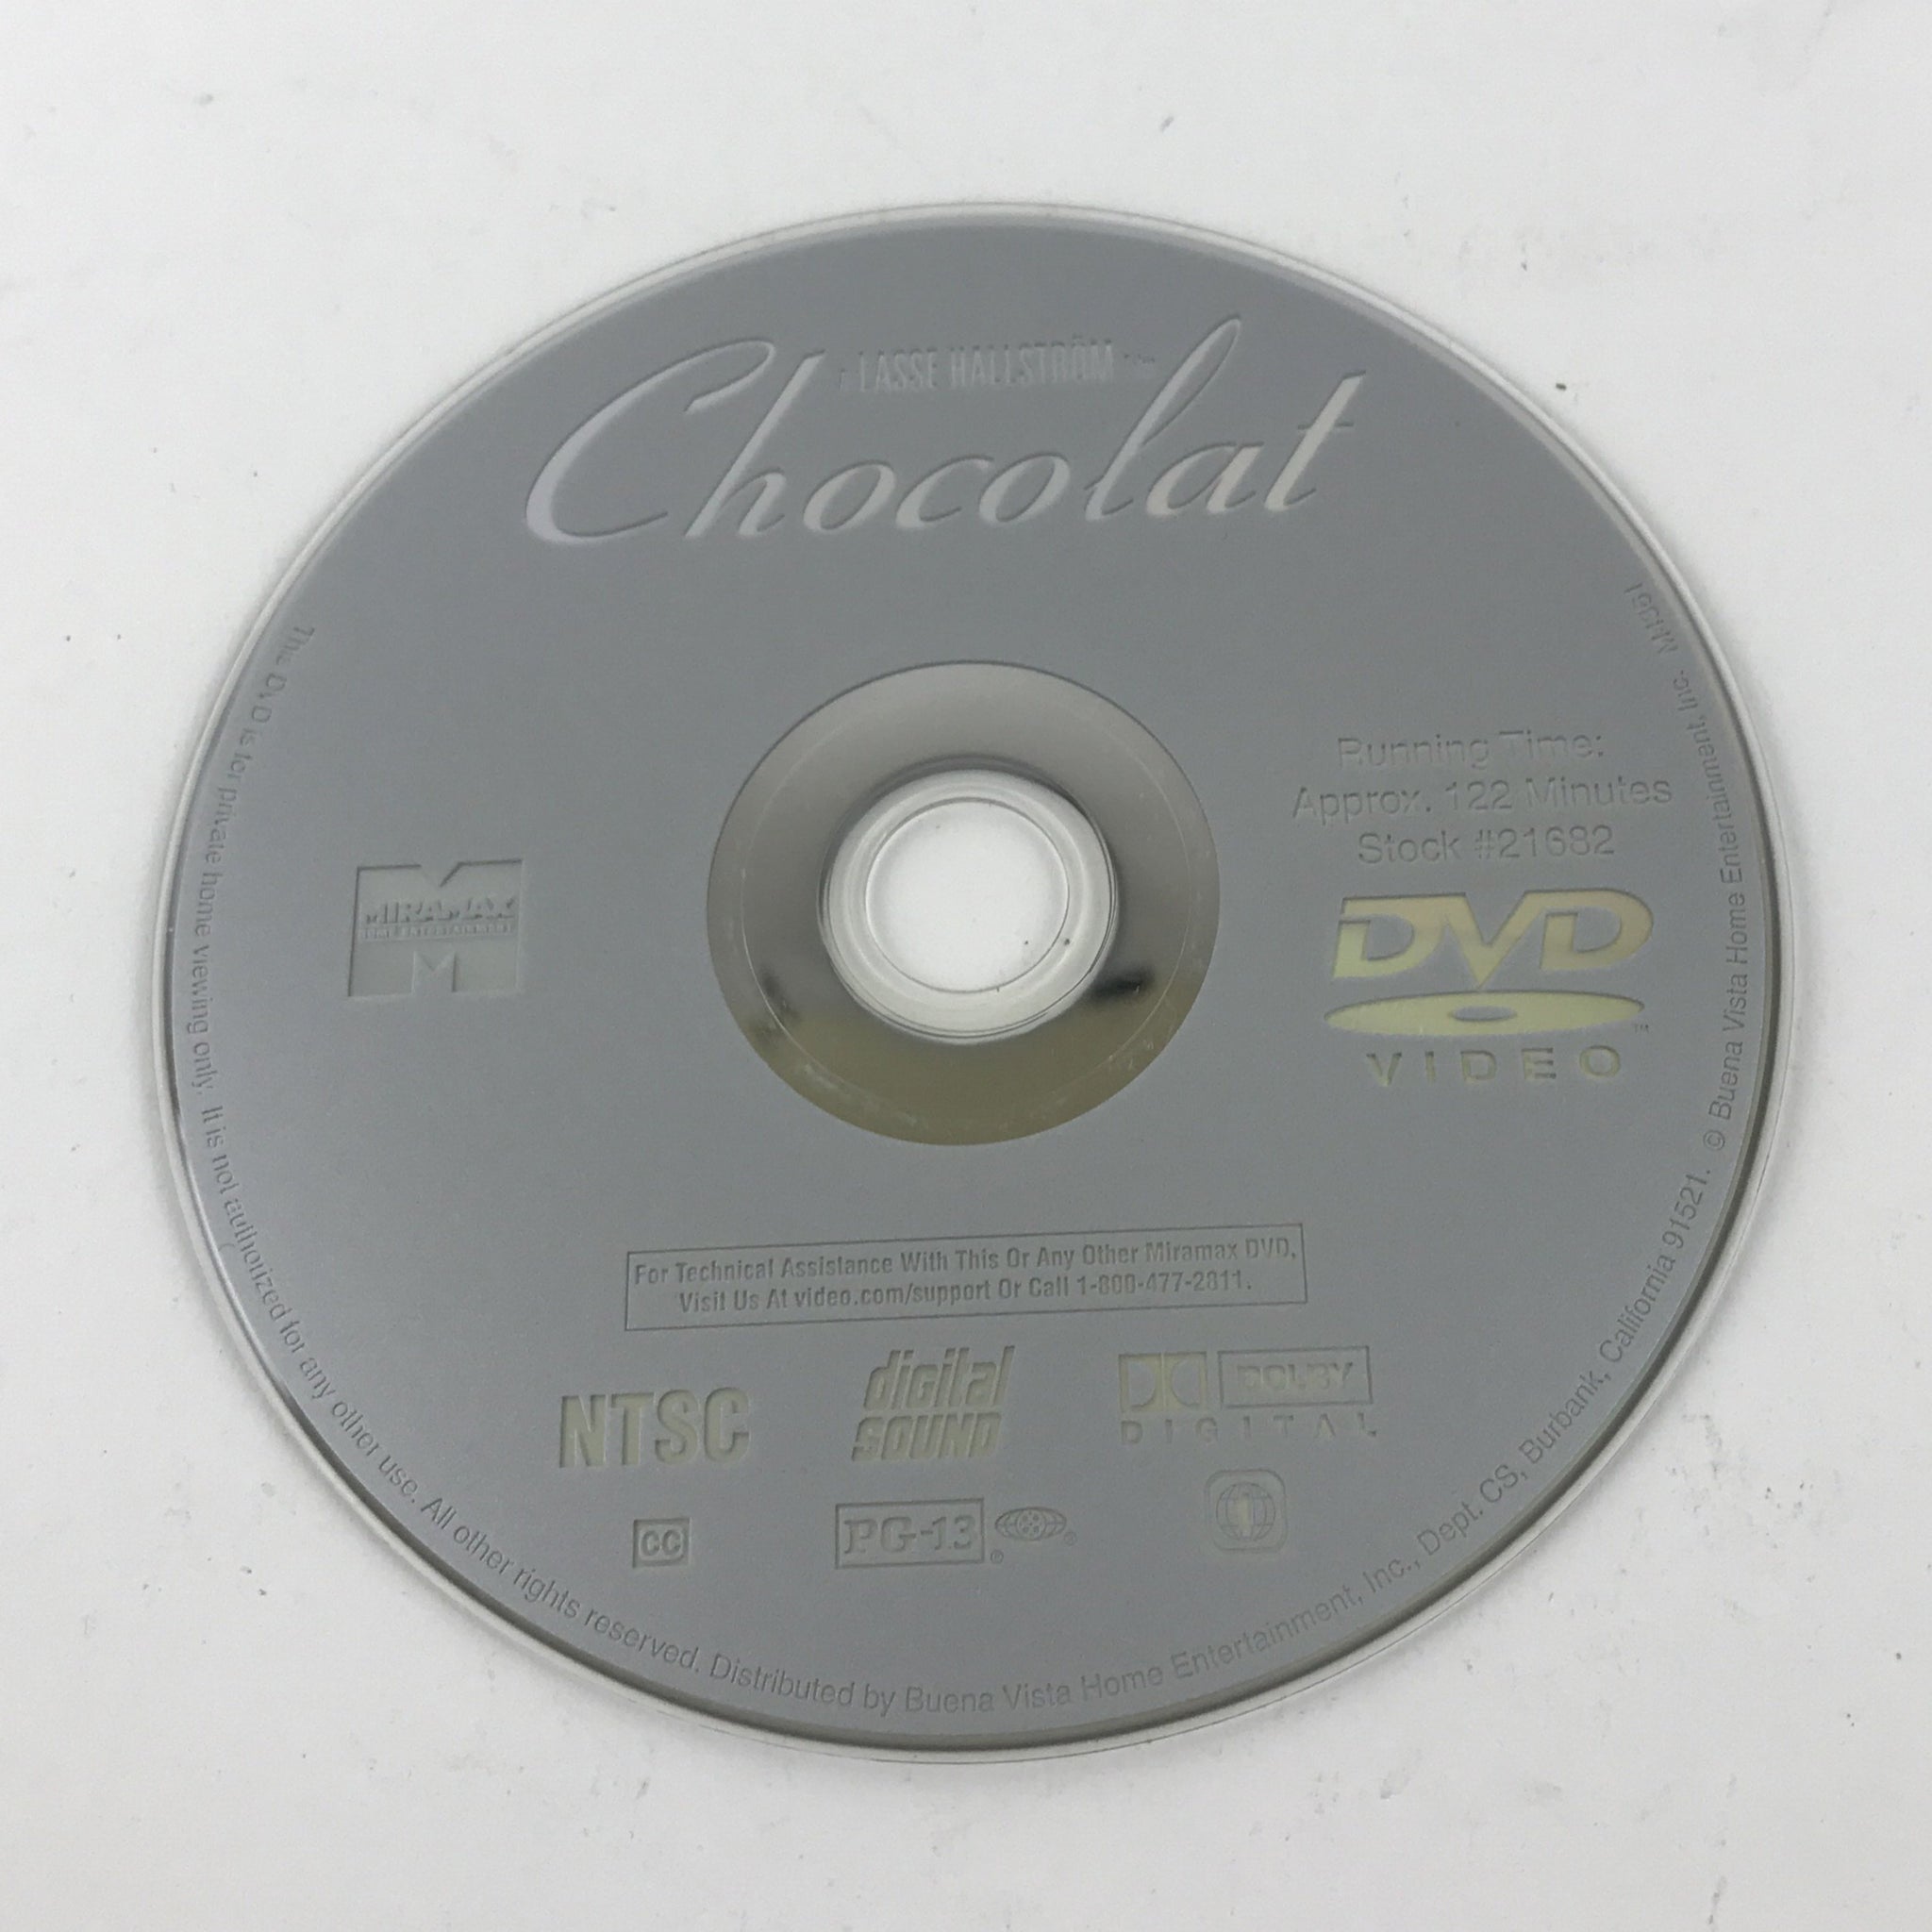 Chocolat (DVD, Widescreen) Juliette Binoche, Judi Dench, Johnny Depp - DISC ONLY